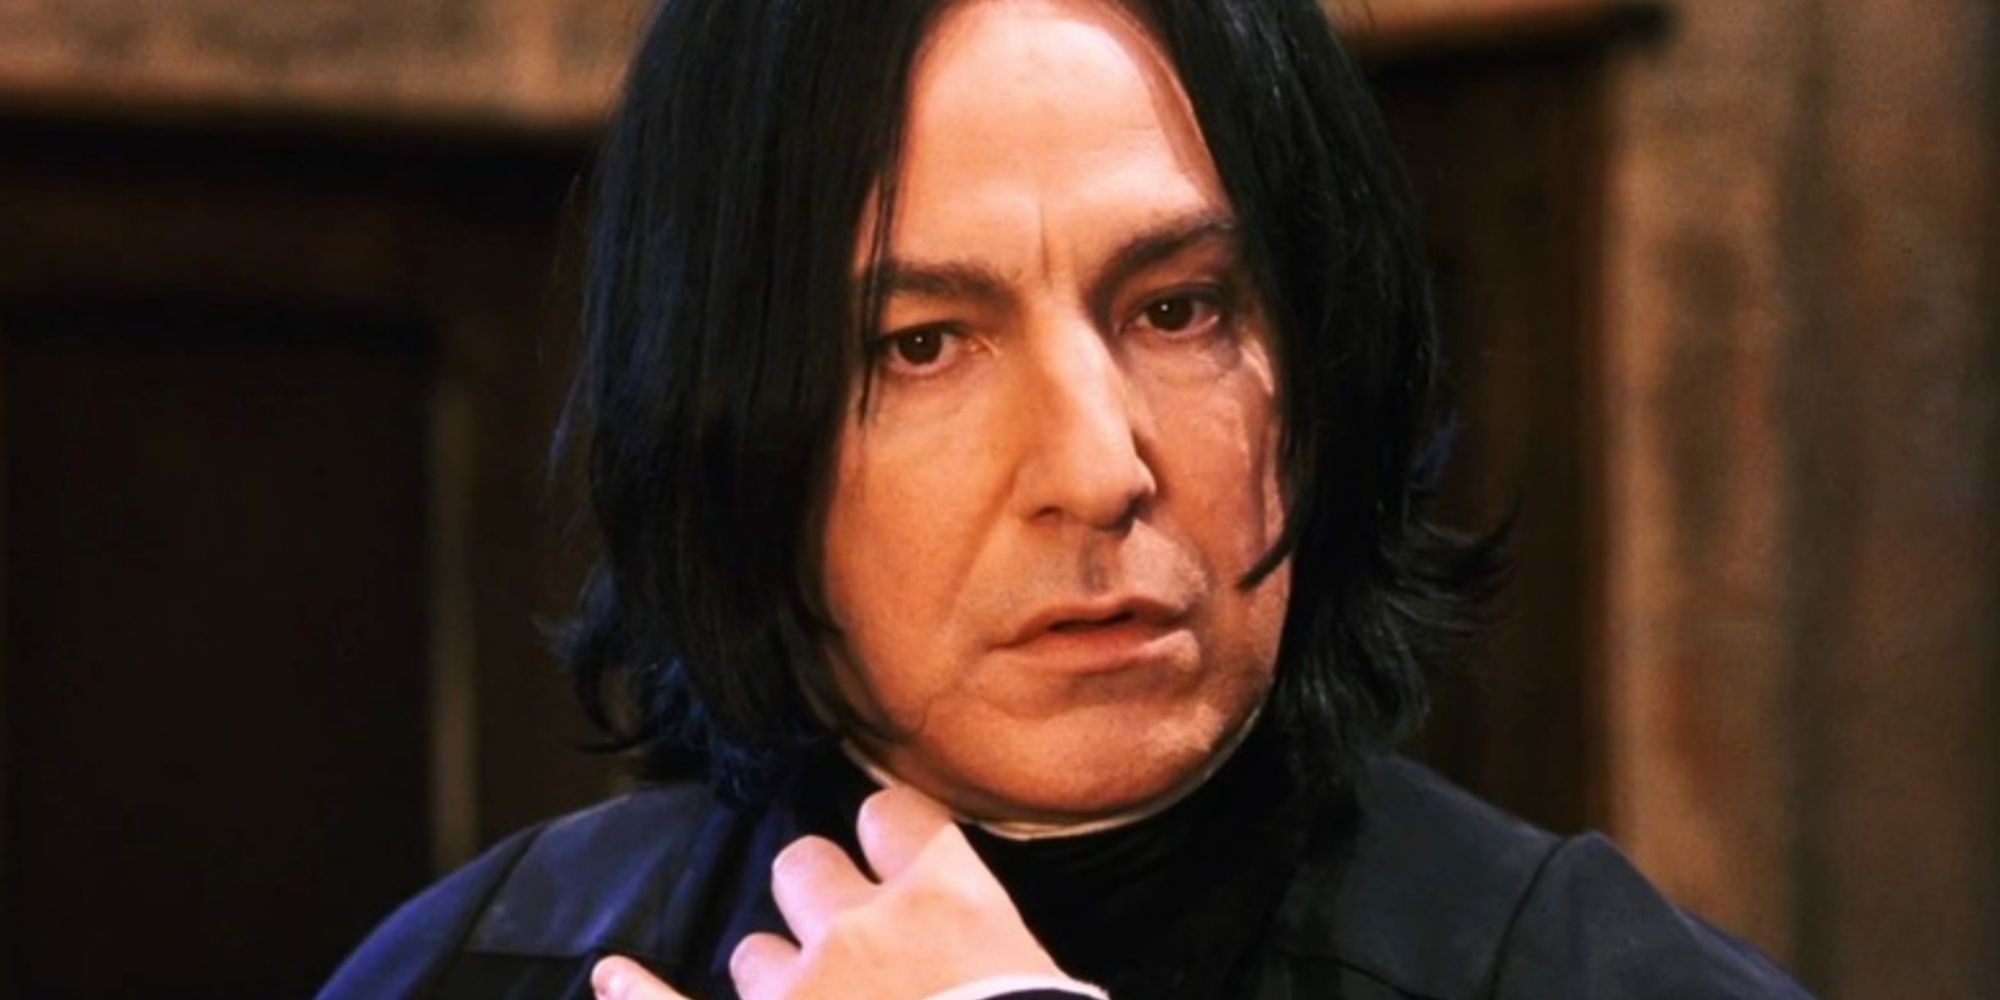 Professor Snape (Alan Rickman) in the Sorceror's Stone staring at Harry Potter